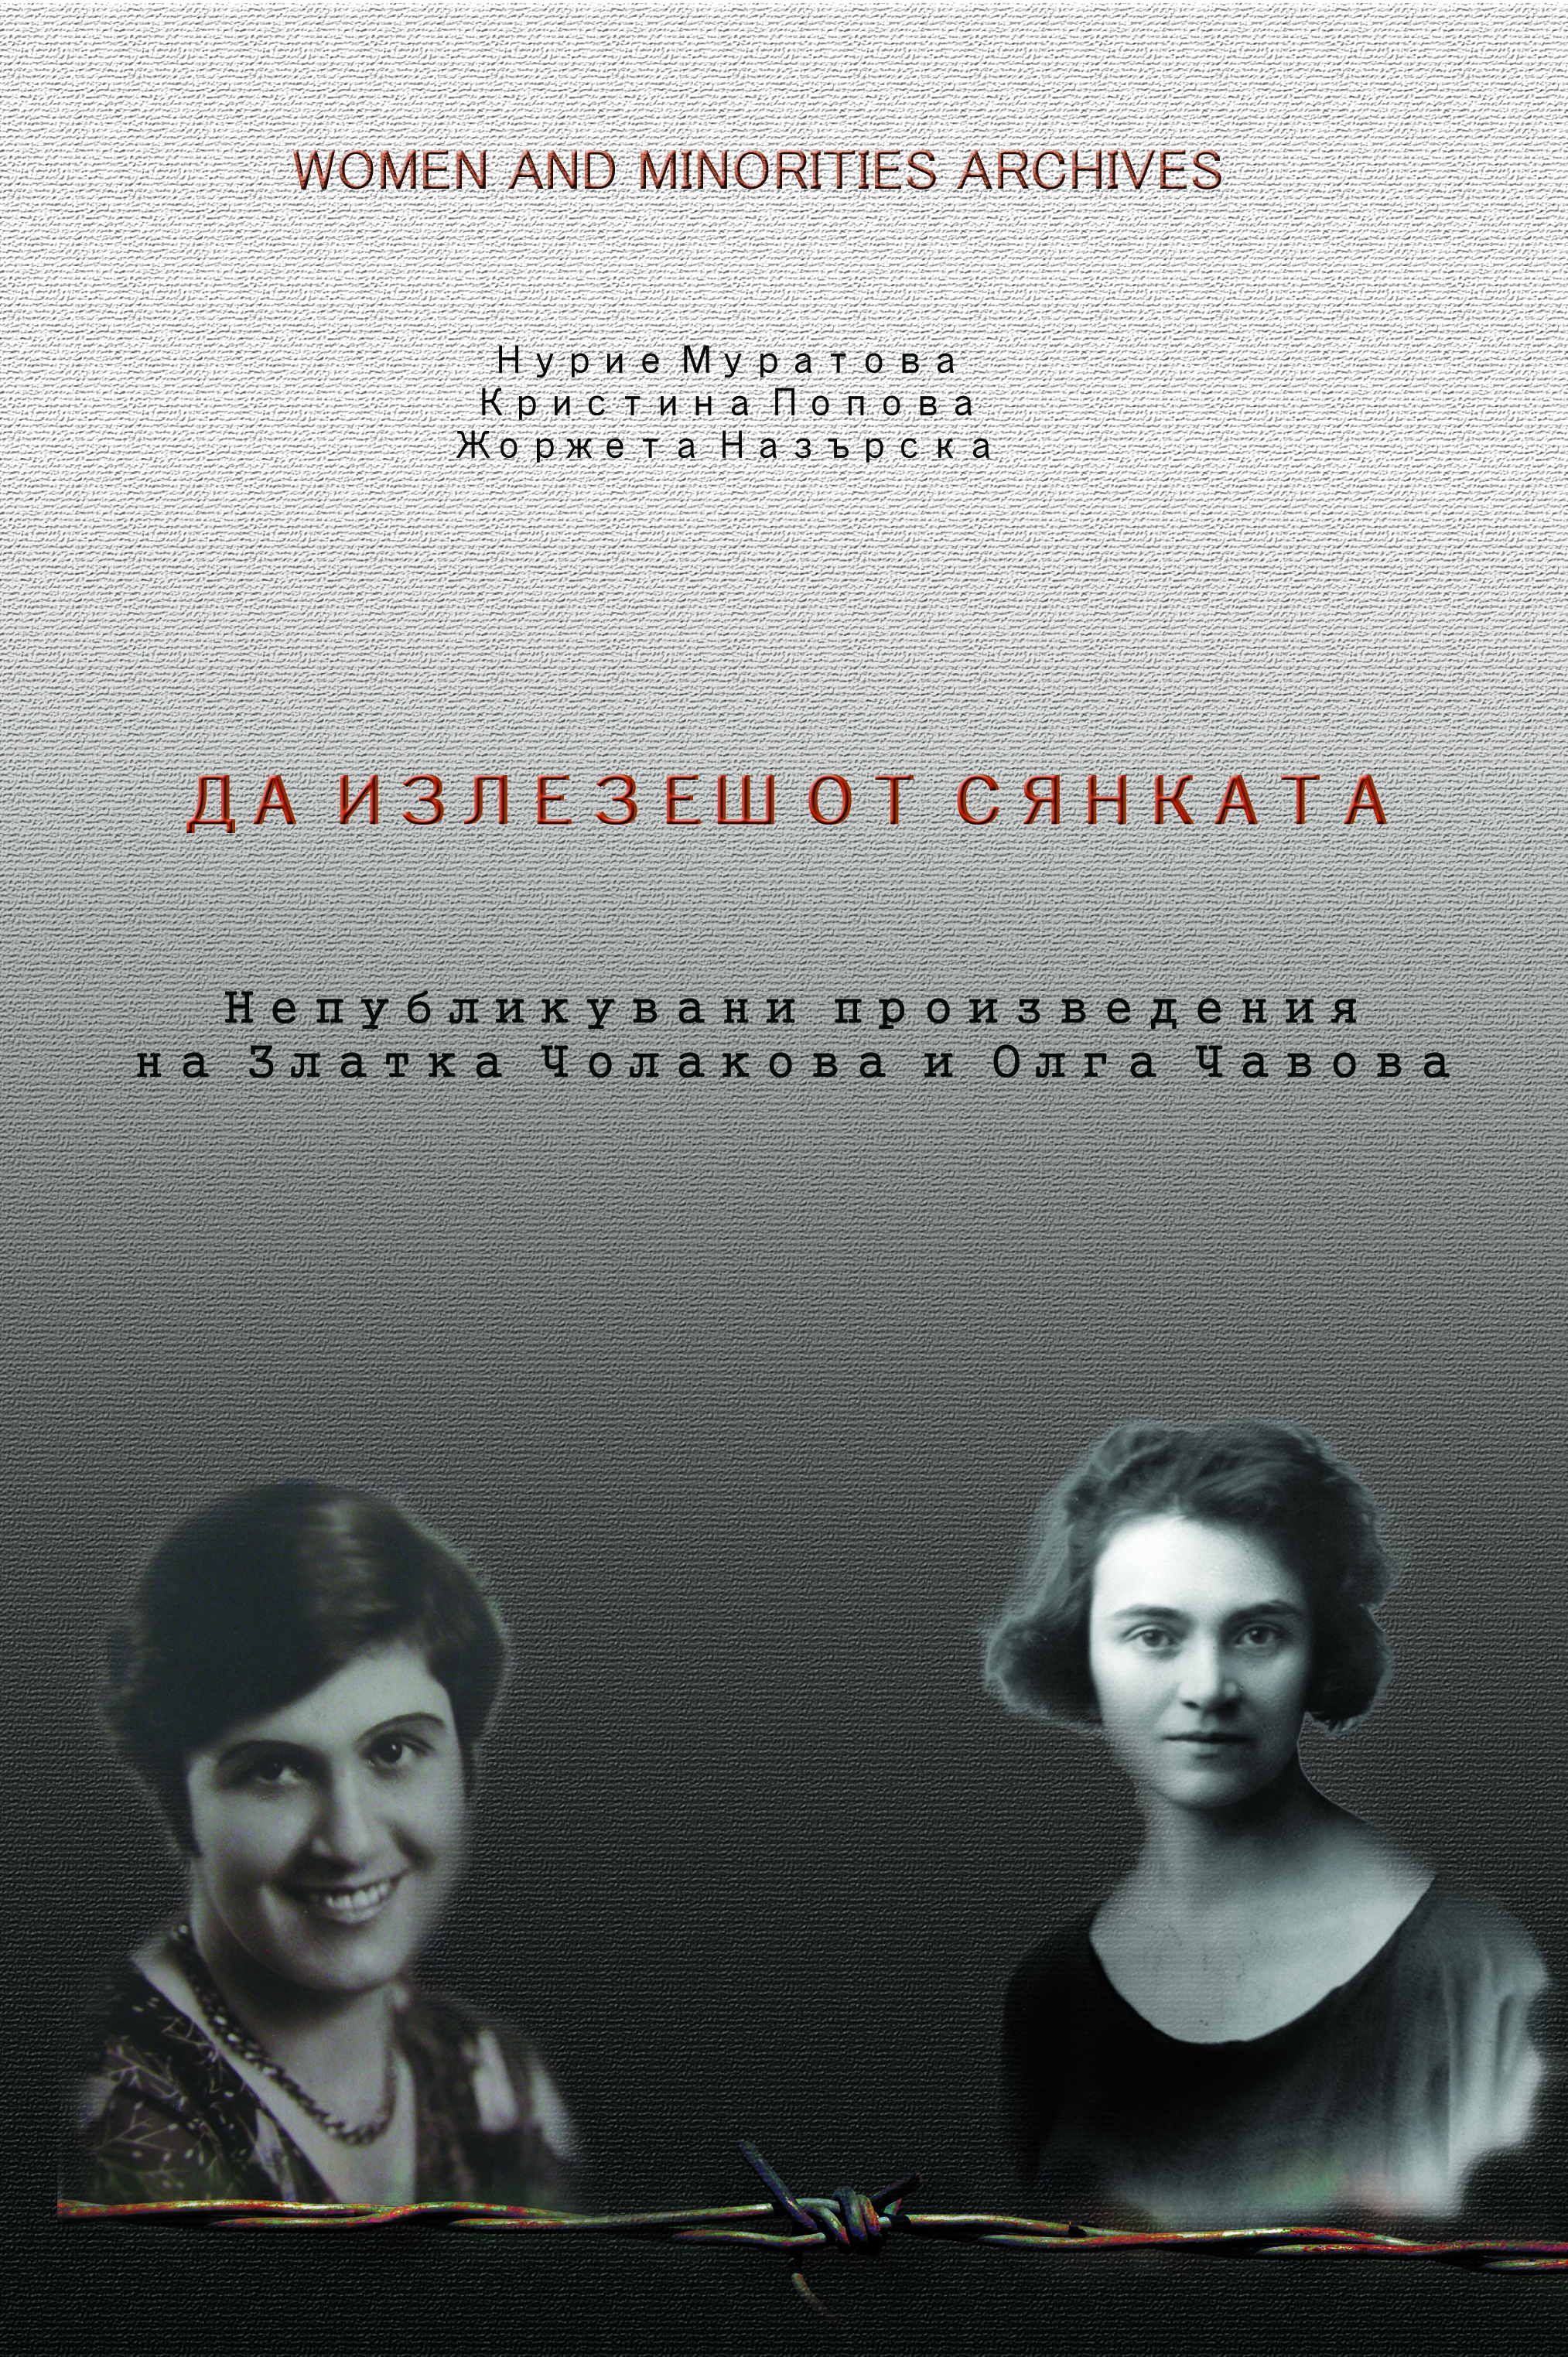 Olga Chavova (1893-1973). Biographical presentation Cover Image